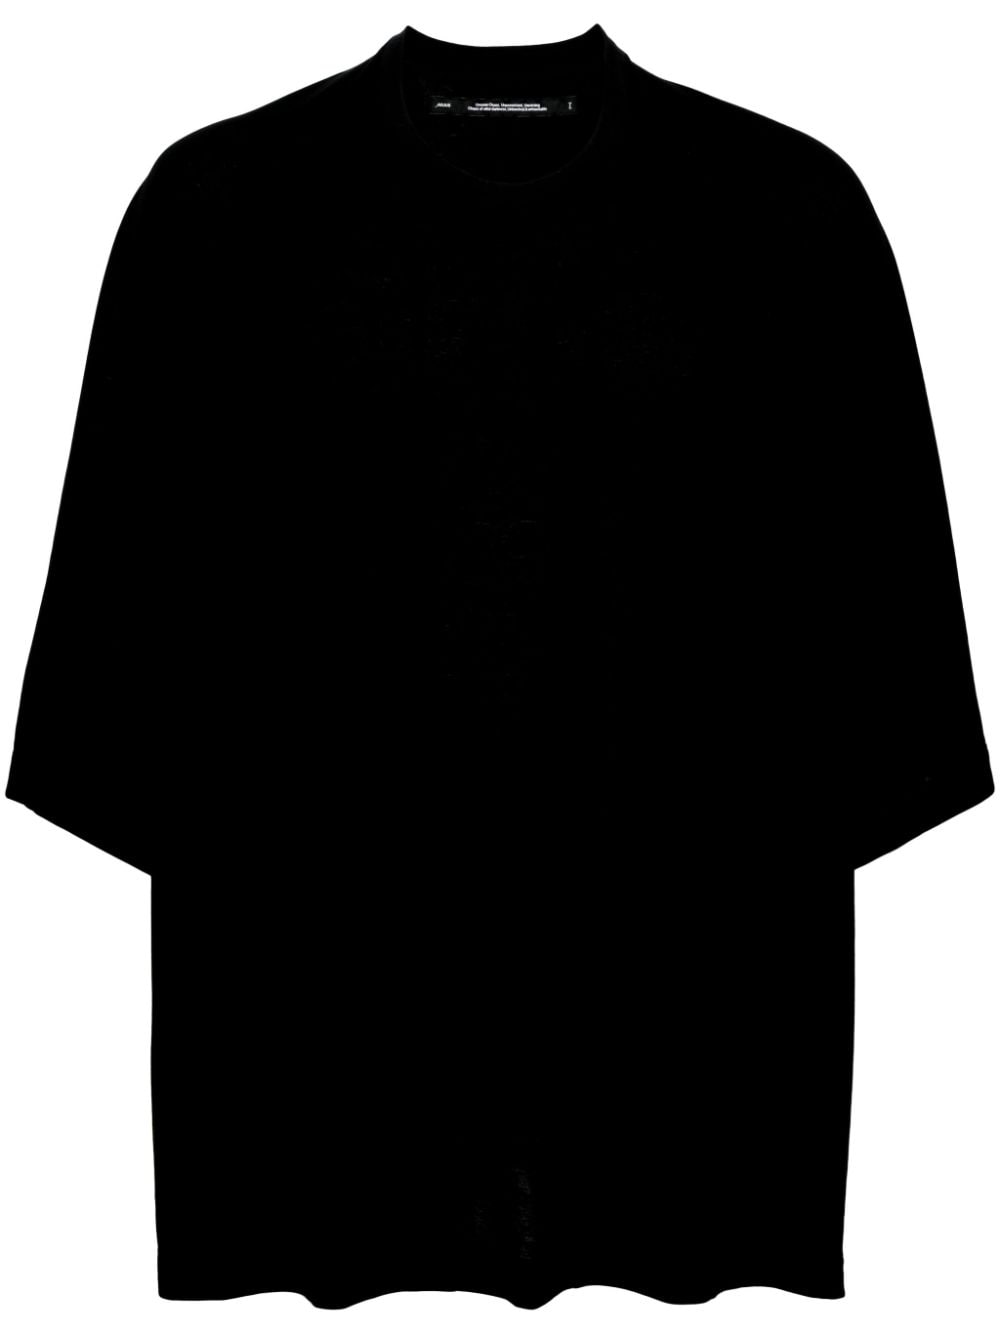 raglan-sleeves cotton T-shirt